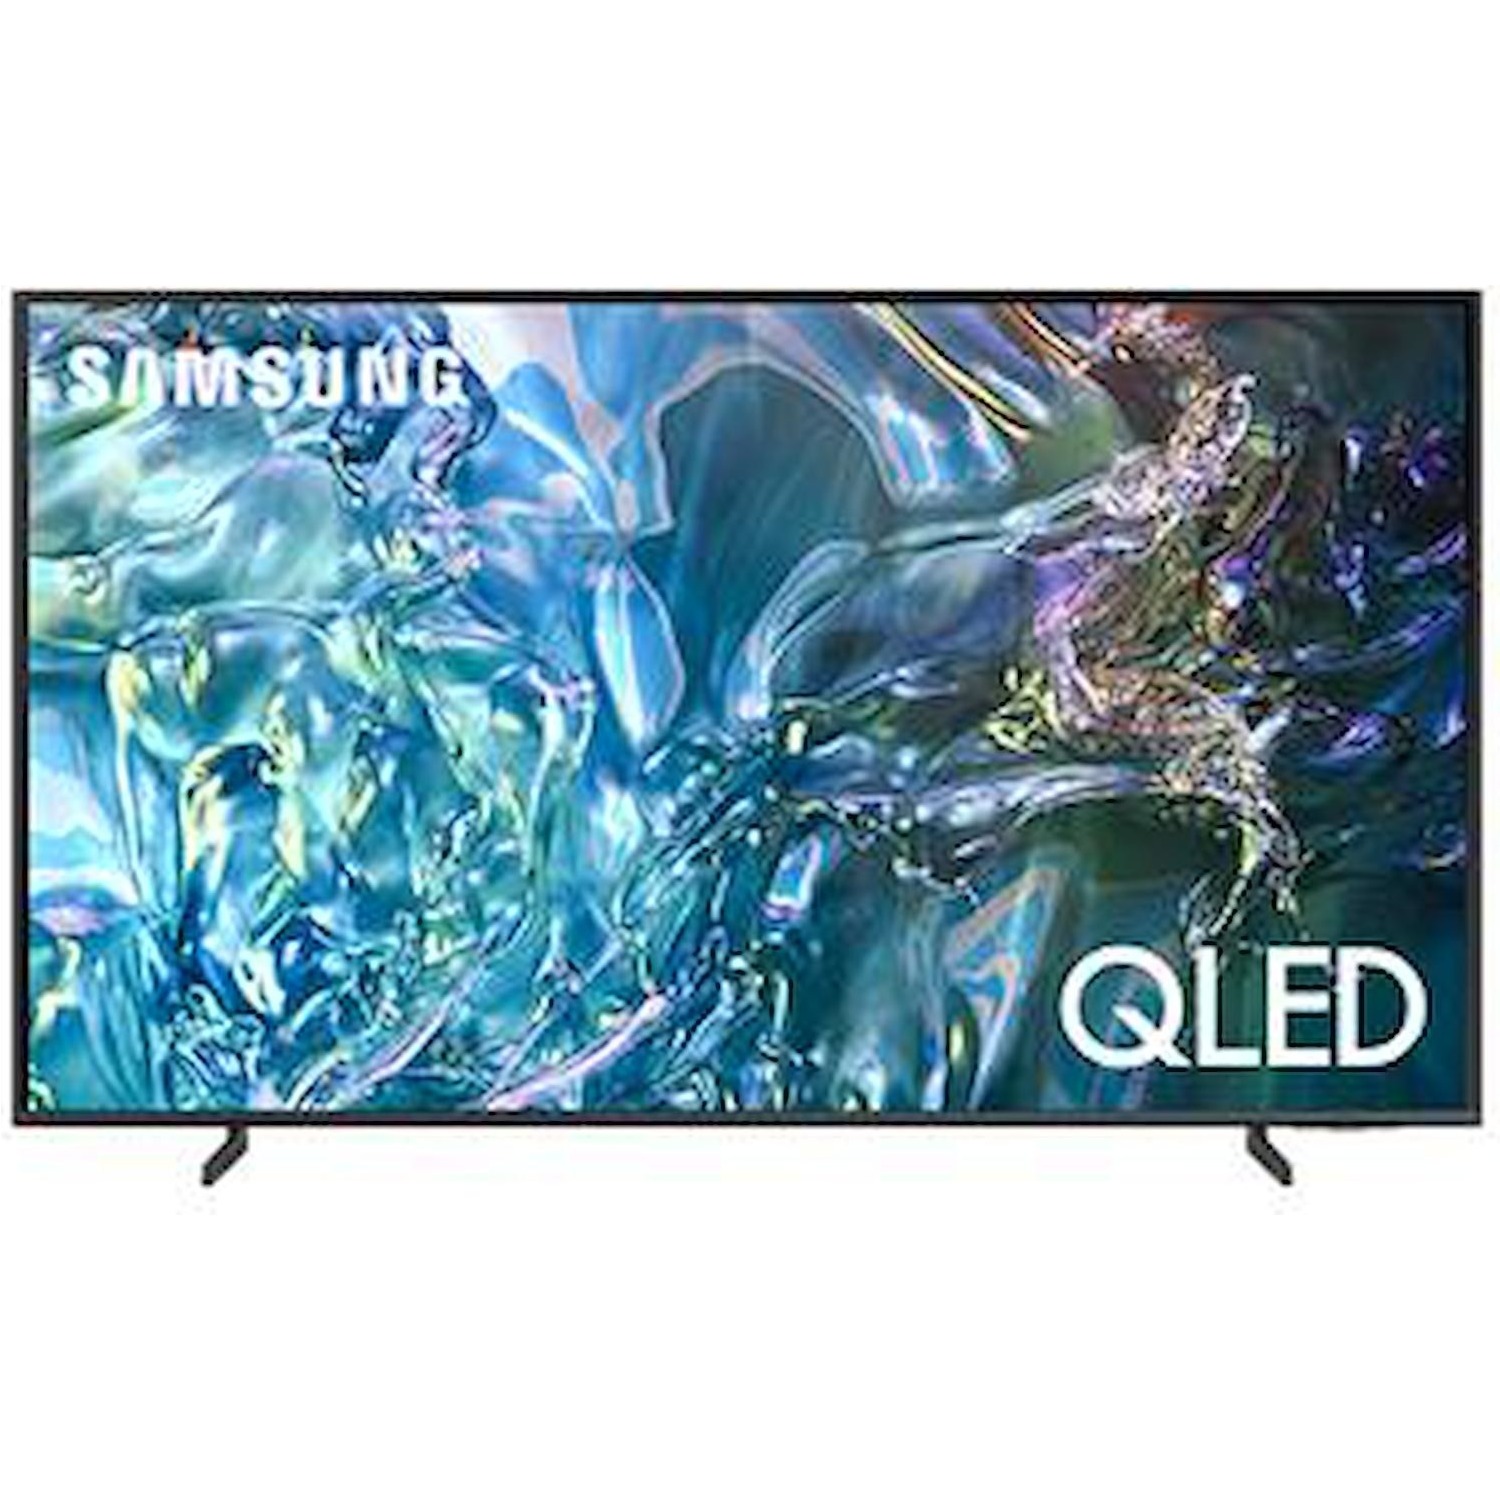 Immagine per TV LED Smart 4K UHD Samsung 43Q60D da DIMOStore